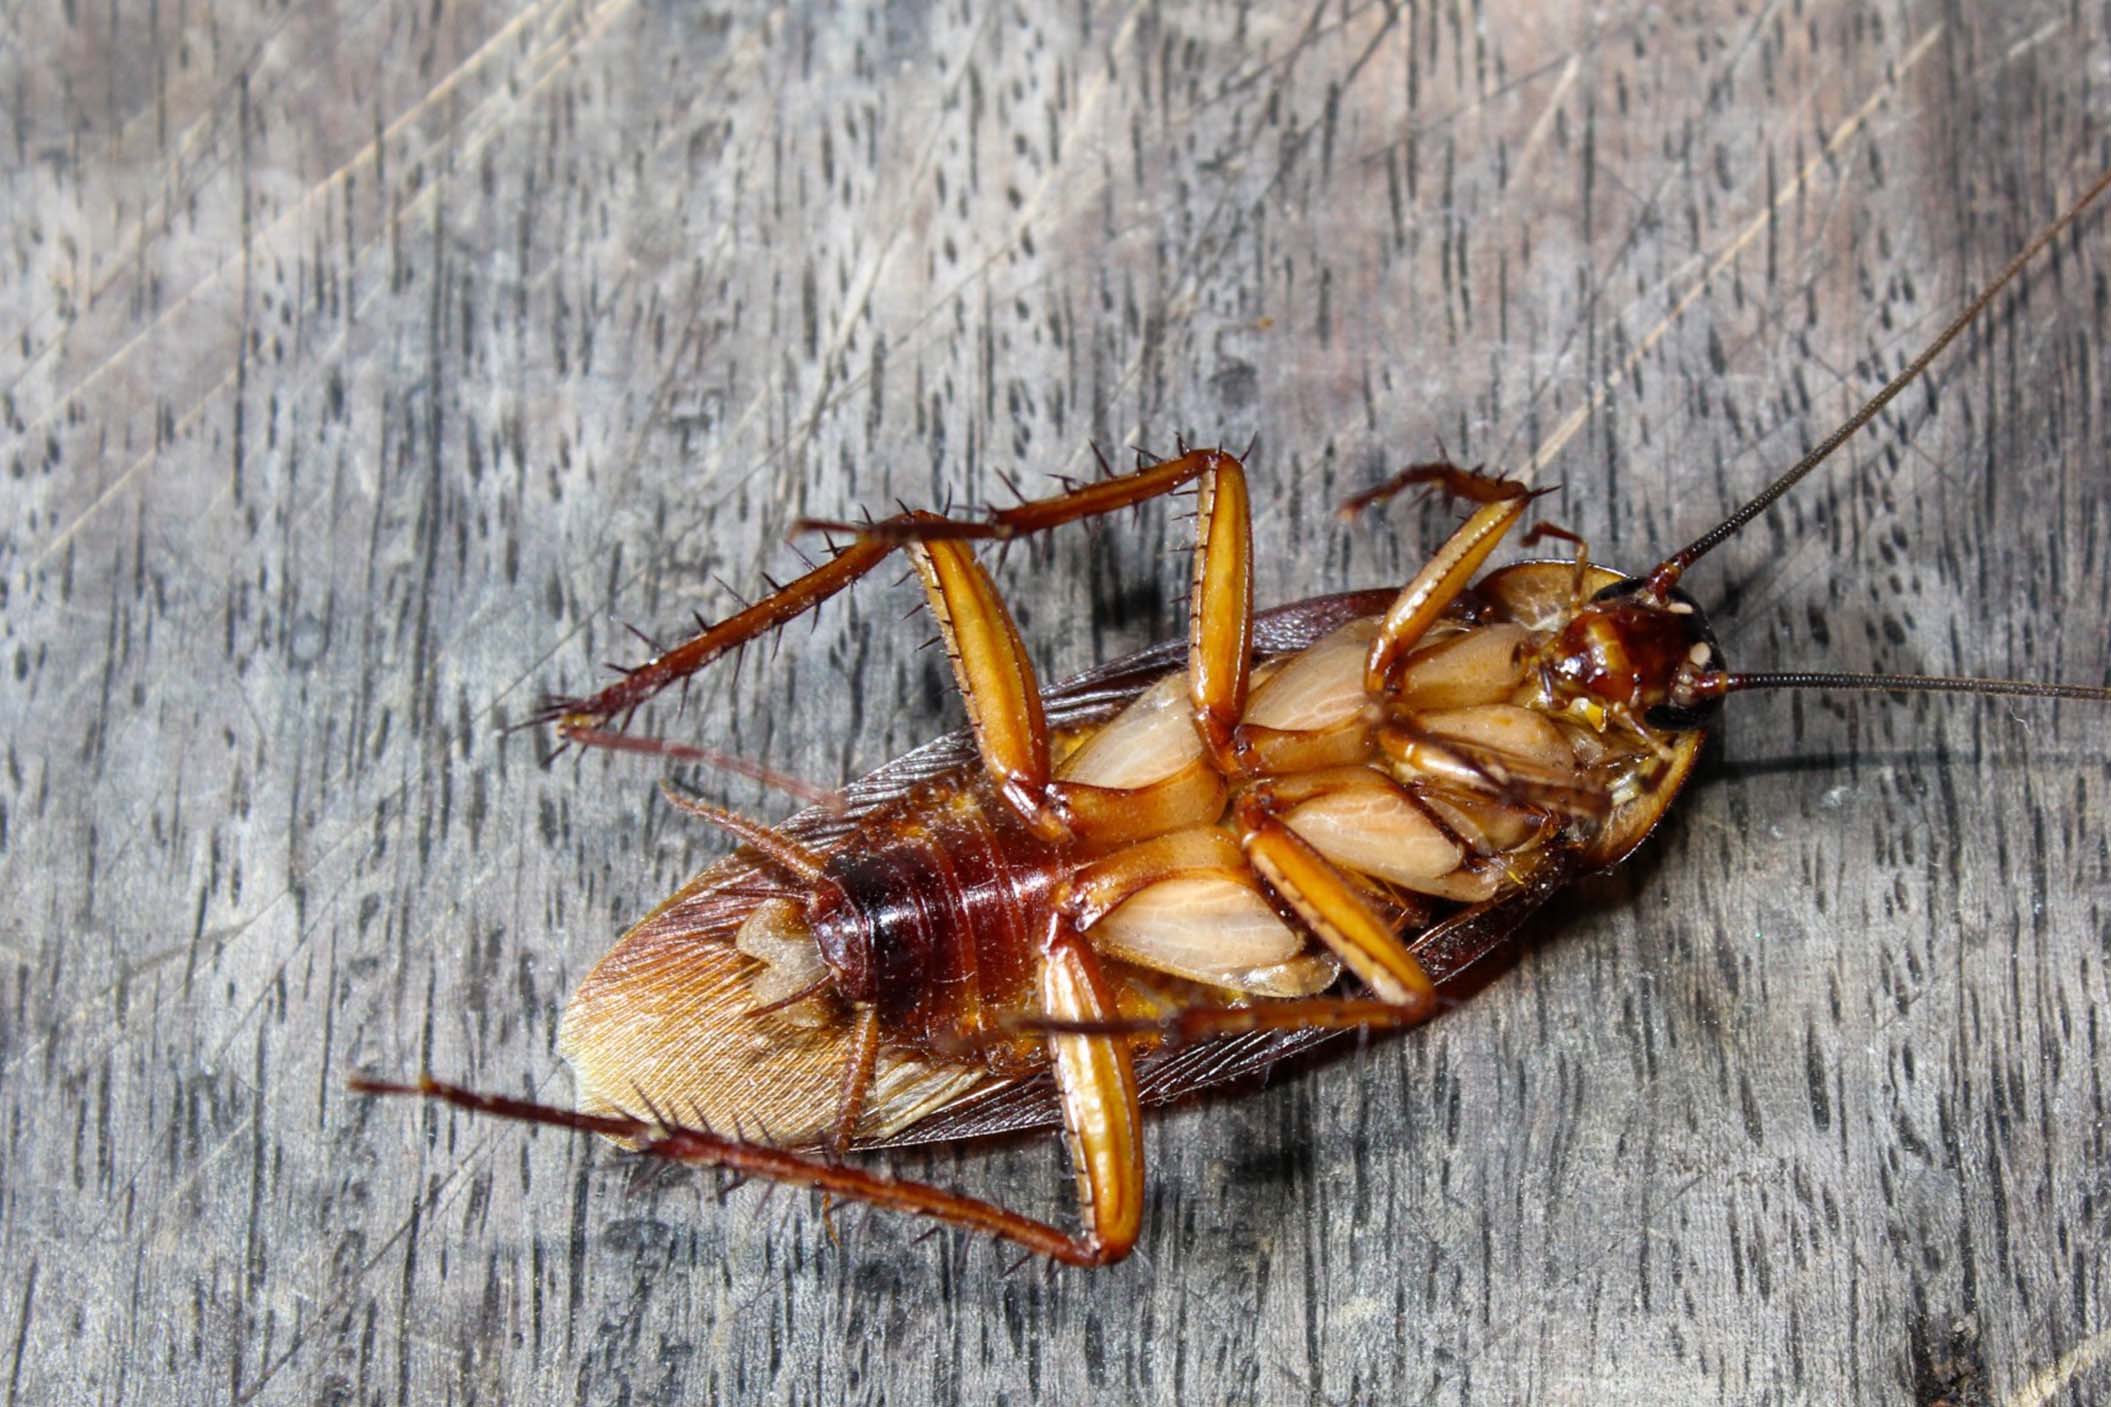 dead cockroach on a wooden floor